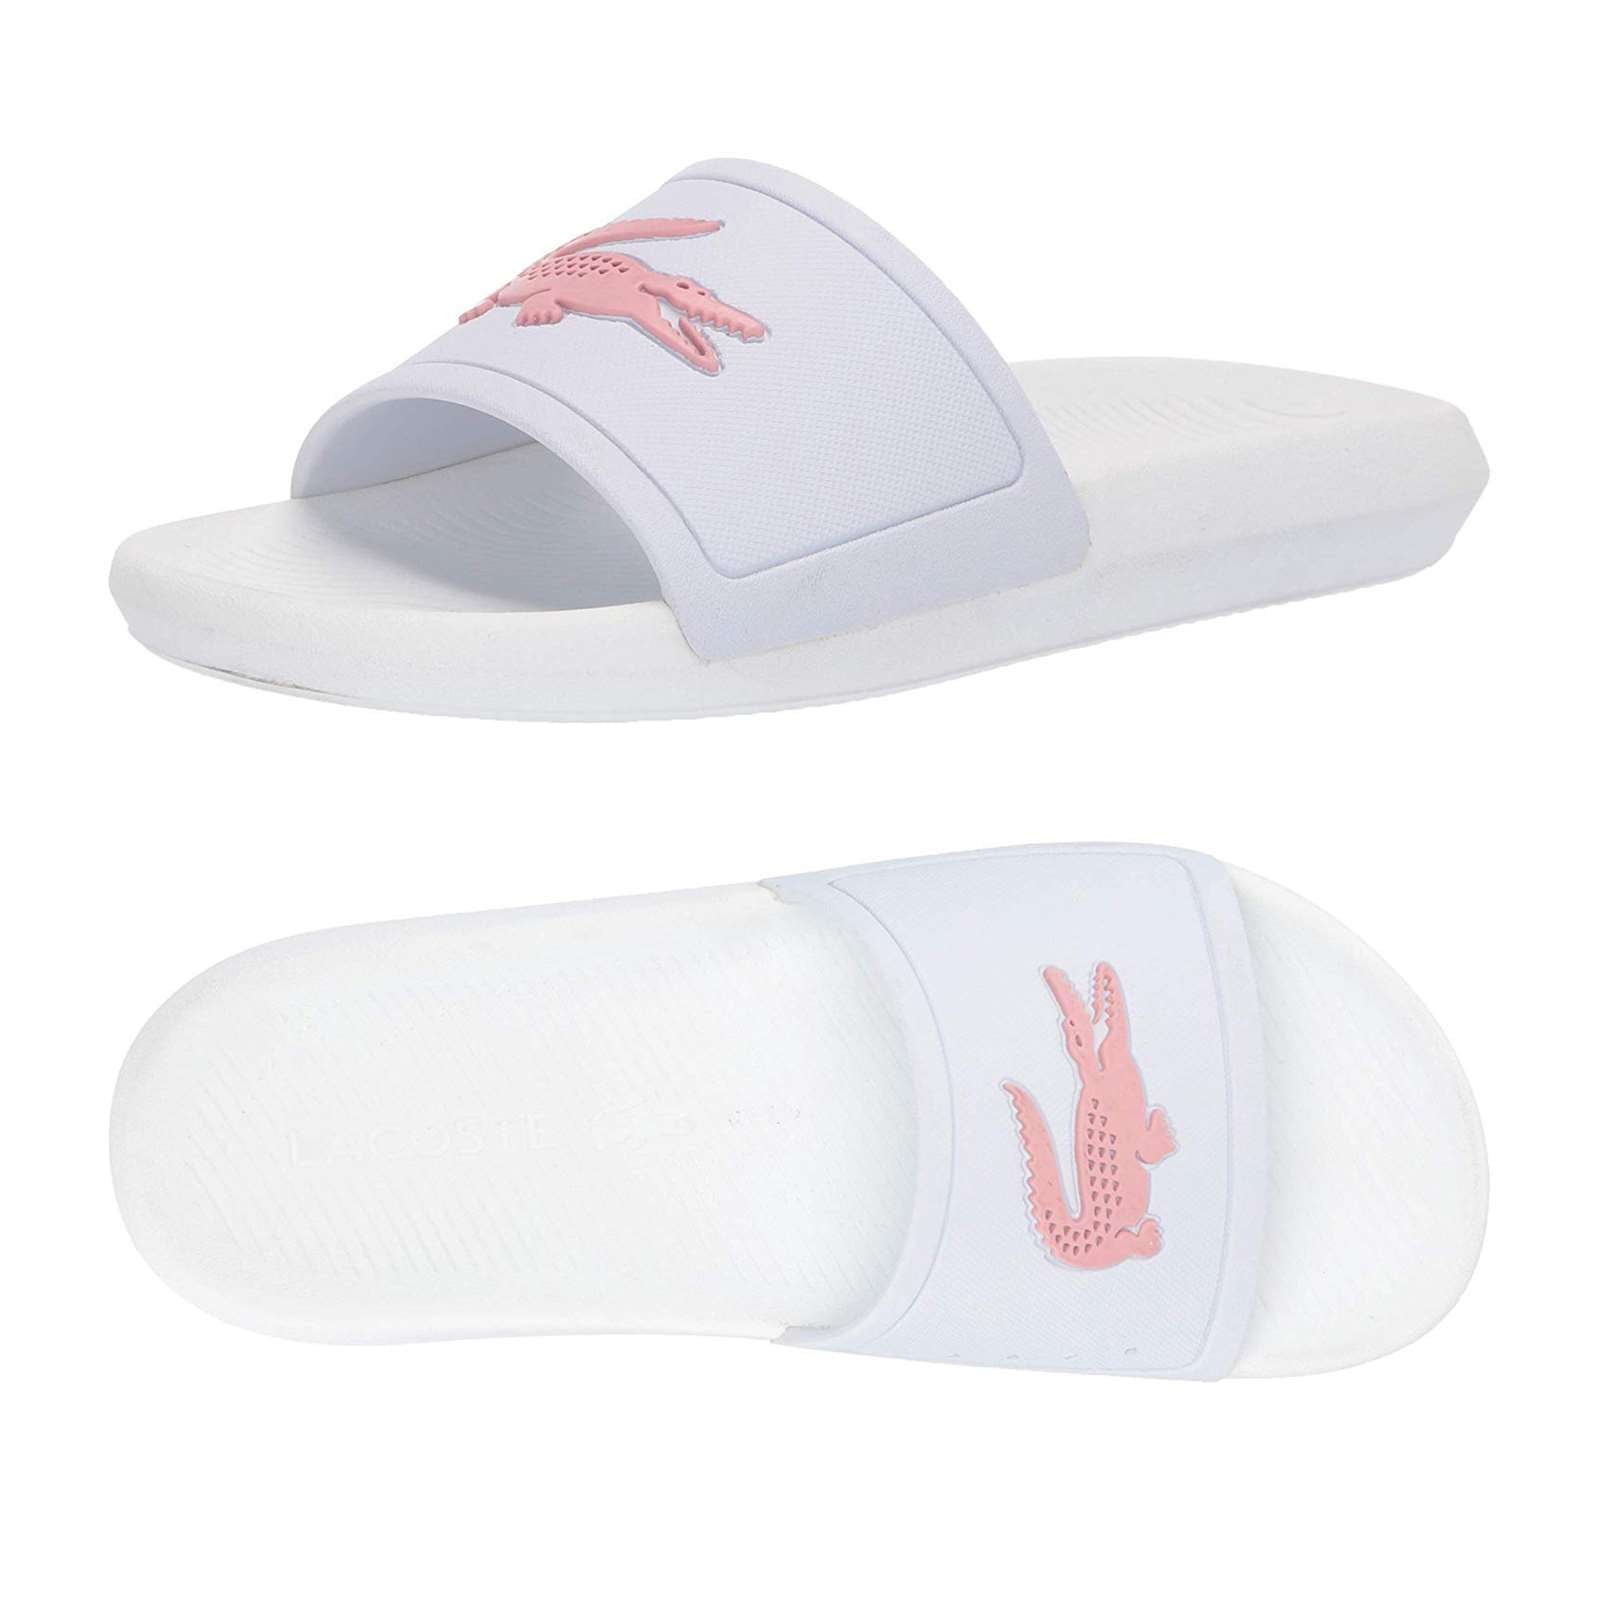 Lacoste Women Croco Slide Sandals - Walmart.com